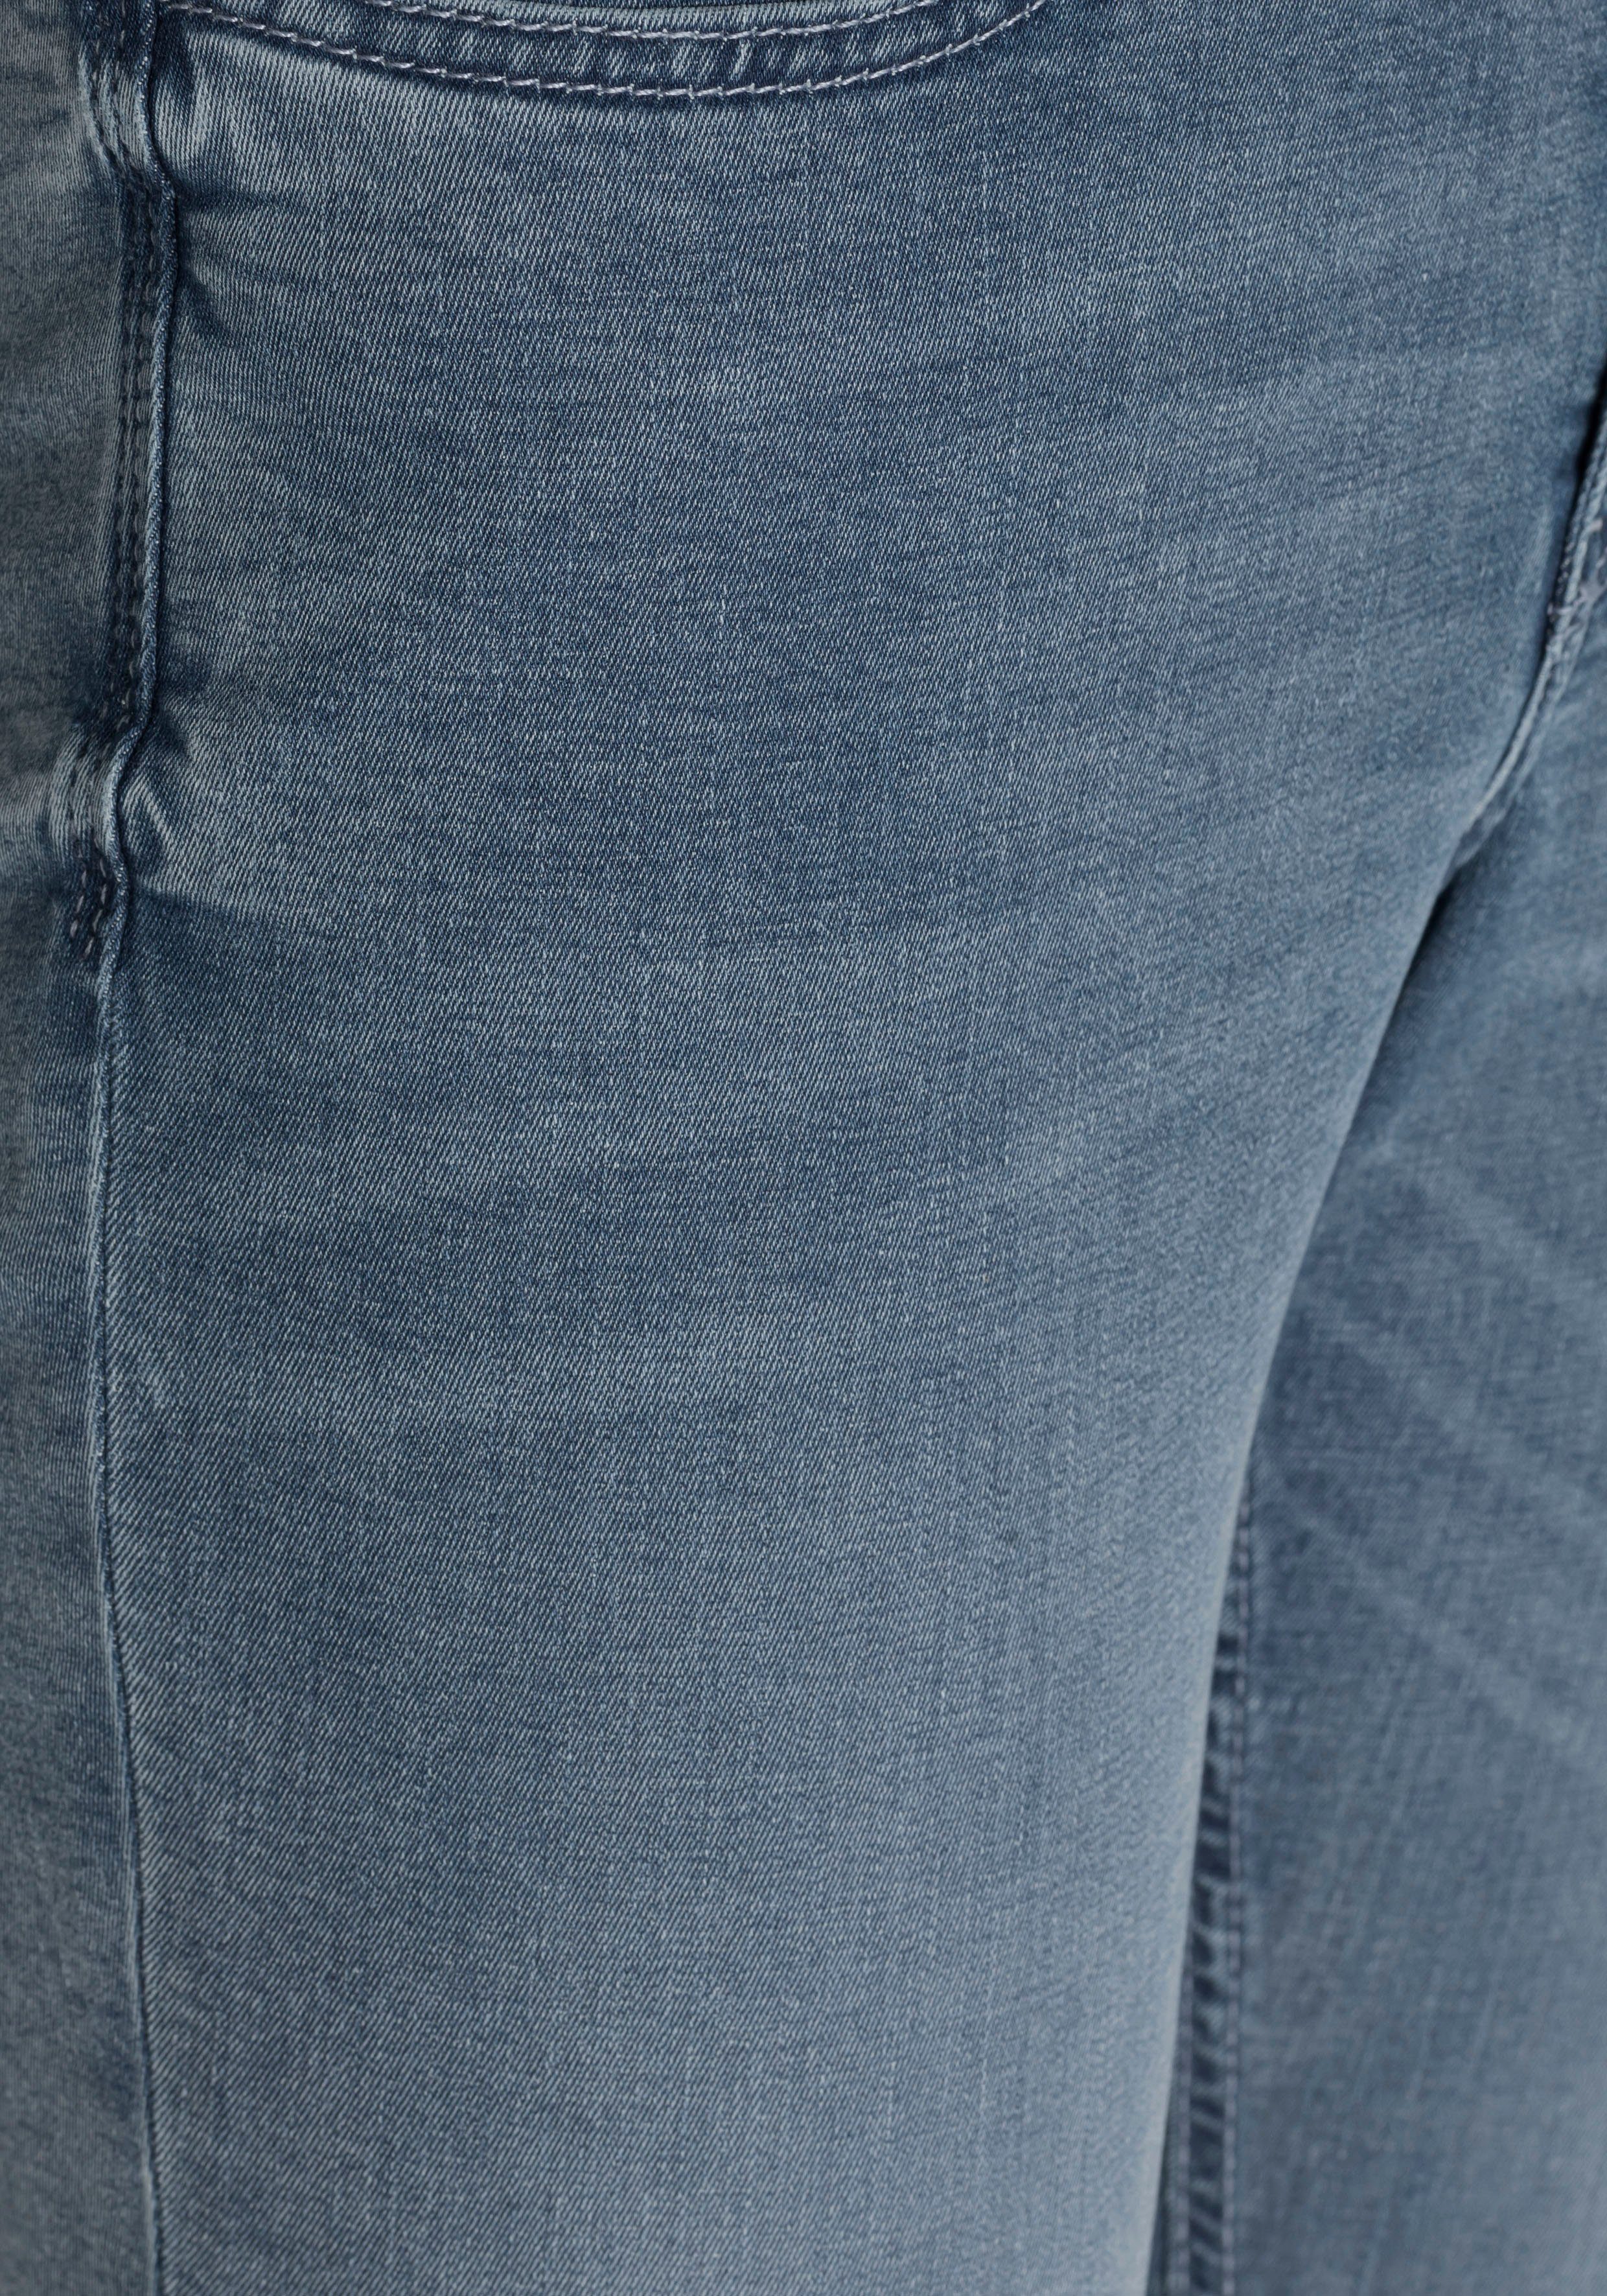 bequem random MAC Qualität wash Skinny-fit-Jeans den light sitzt blue ganzen Power-Stretch Hiperstretch-Skinny Tag